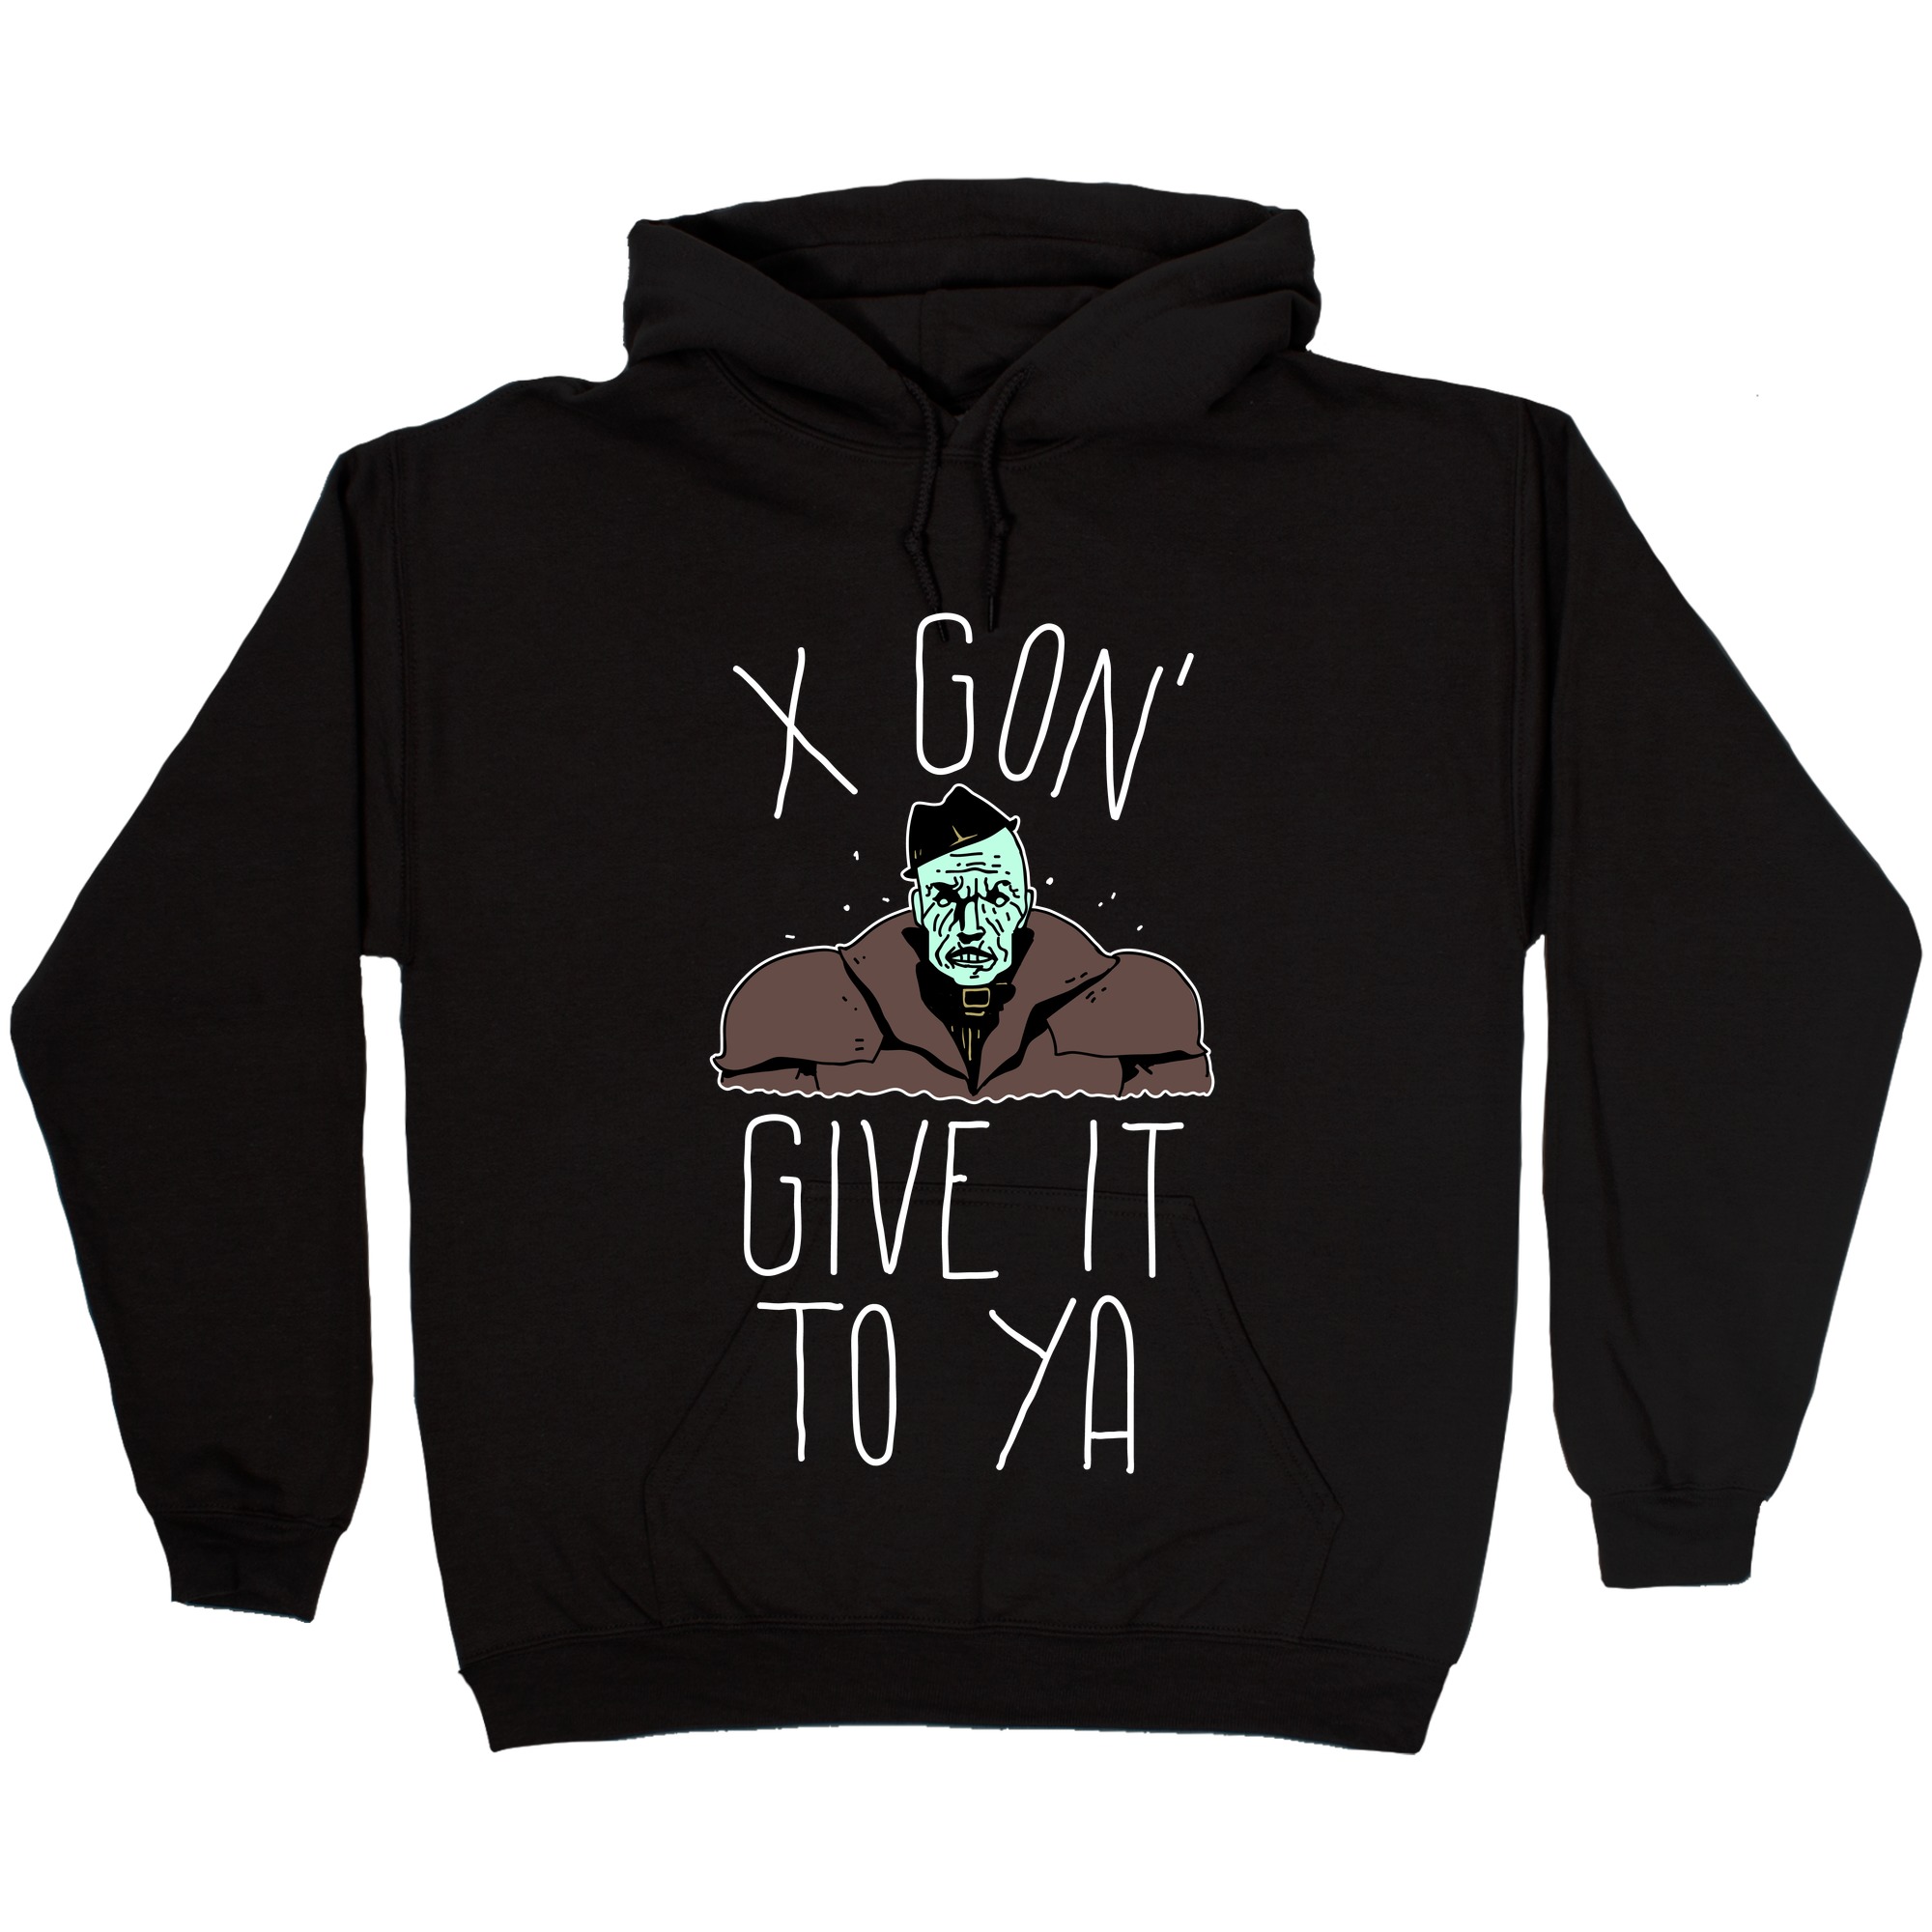 Mr X Gon Give It To Ya Hooded Sweatshirts Lookhuman